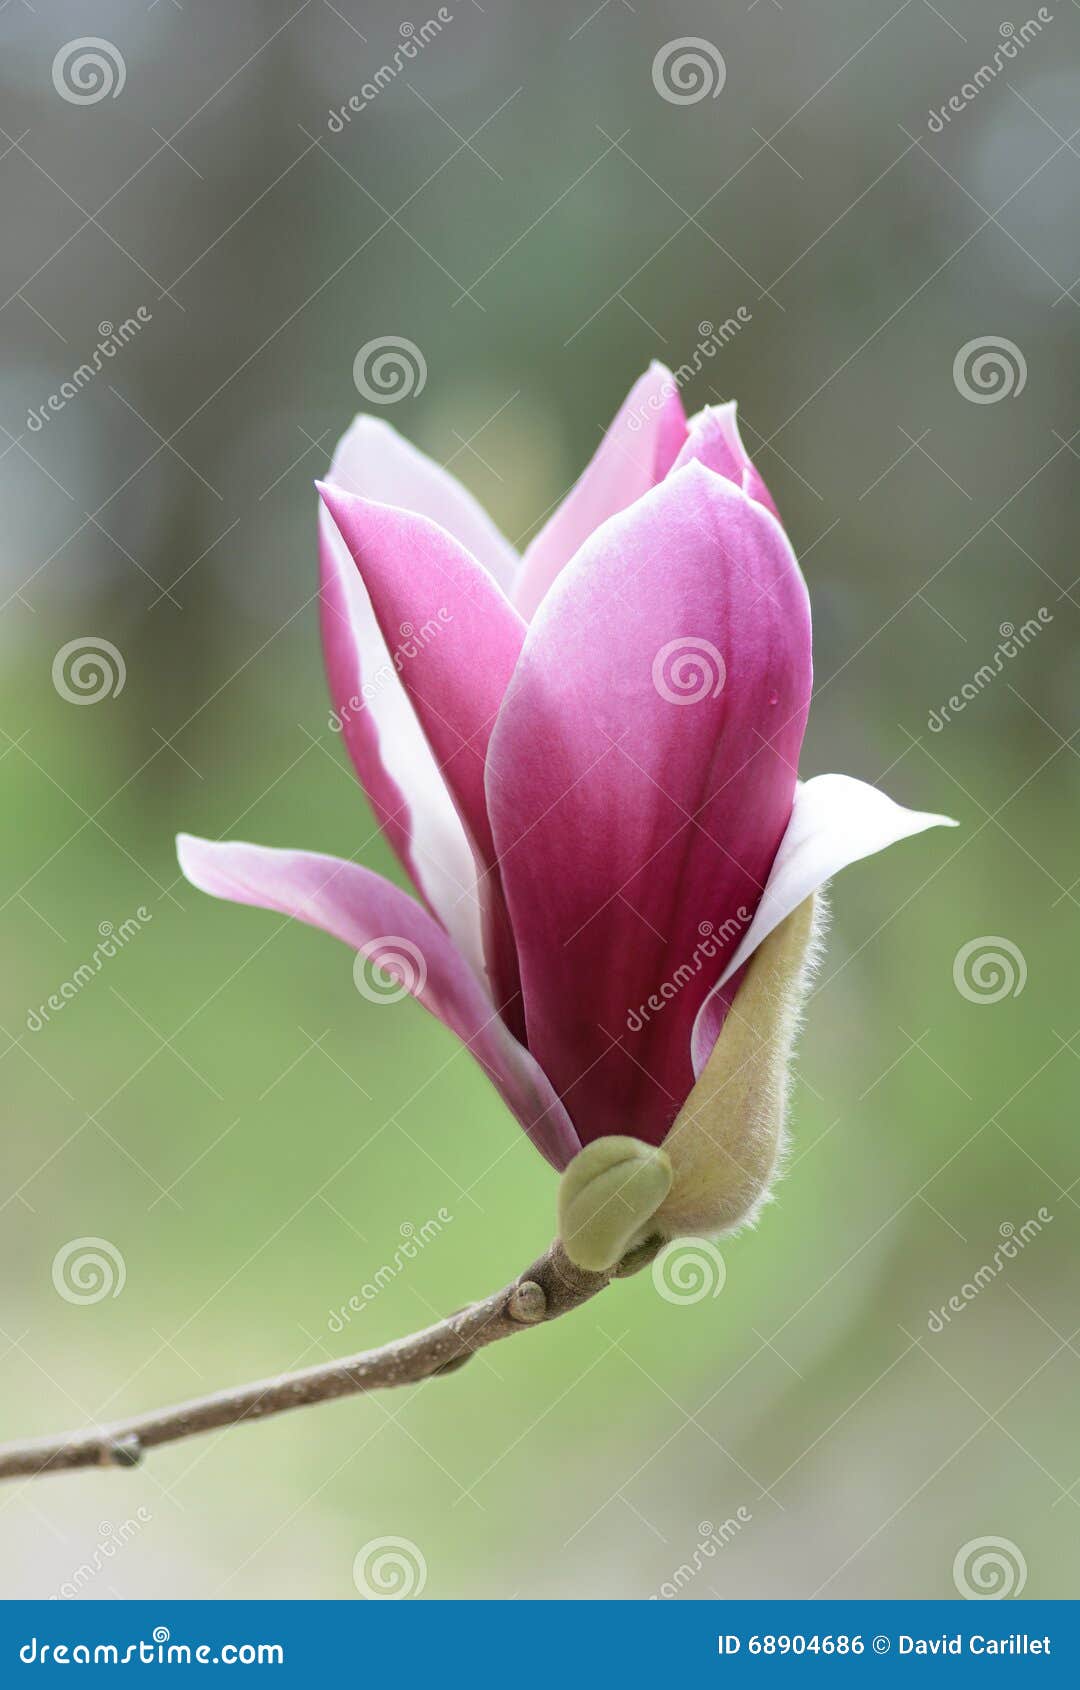 Pink Tulip Magnolia Flower Macro in Spring 2016 Stock Photo - Image of ...